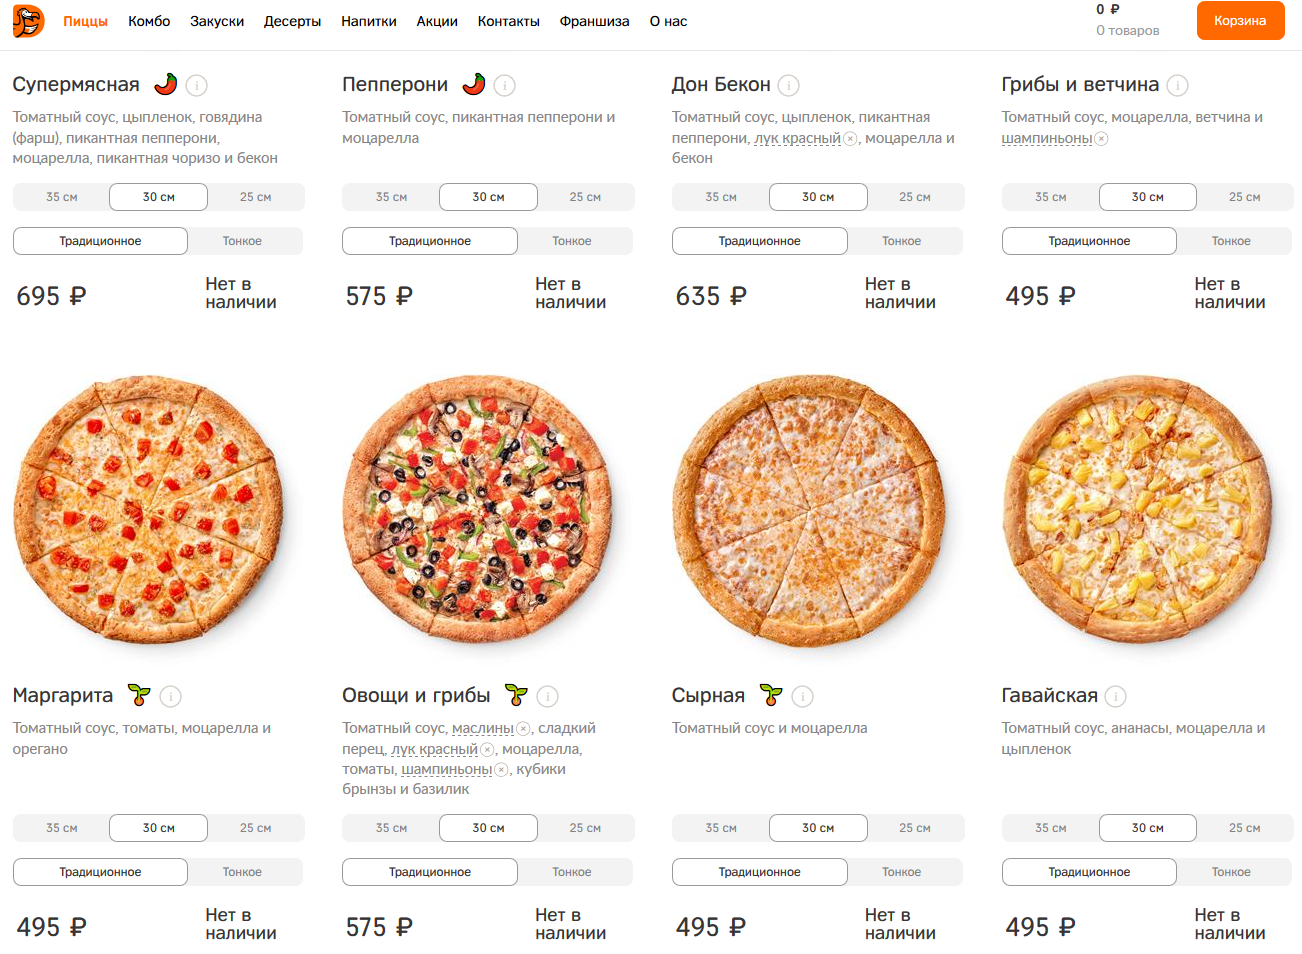 Додо пицца средняя вес 1 куска. Додо пицца пепперони ка. Додо пицца пепперони ккал. Додо пицца калорийность.